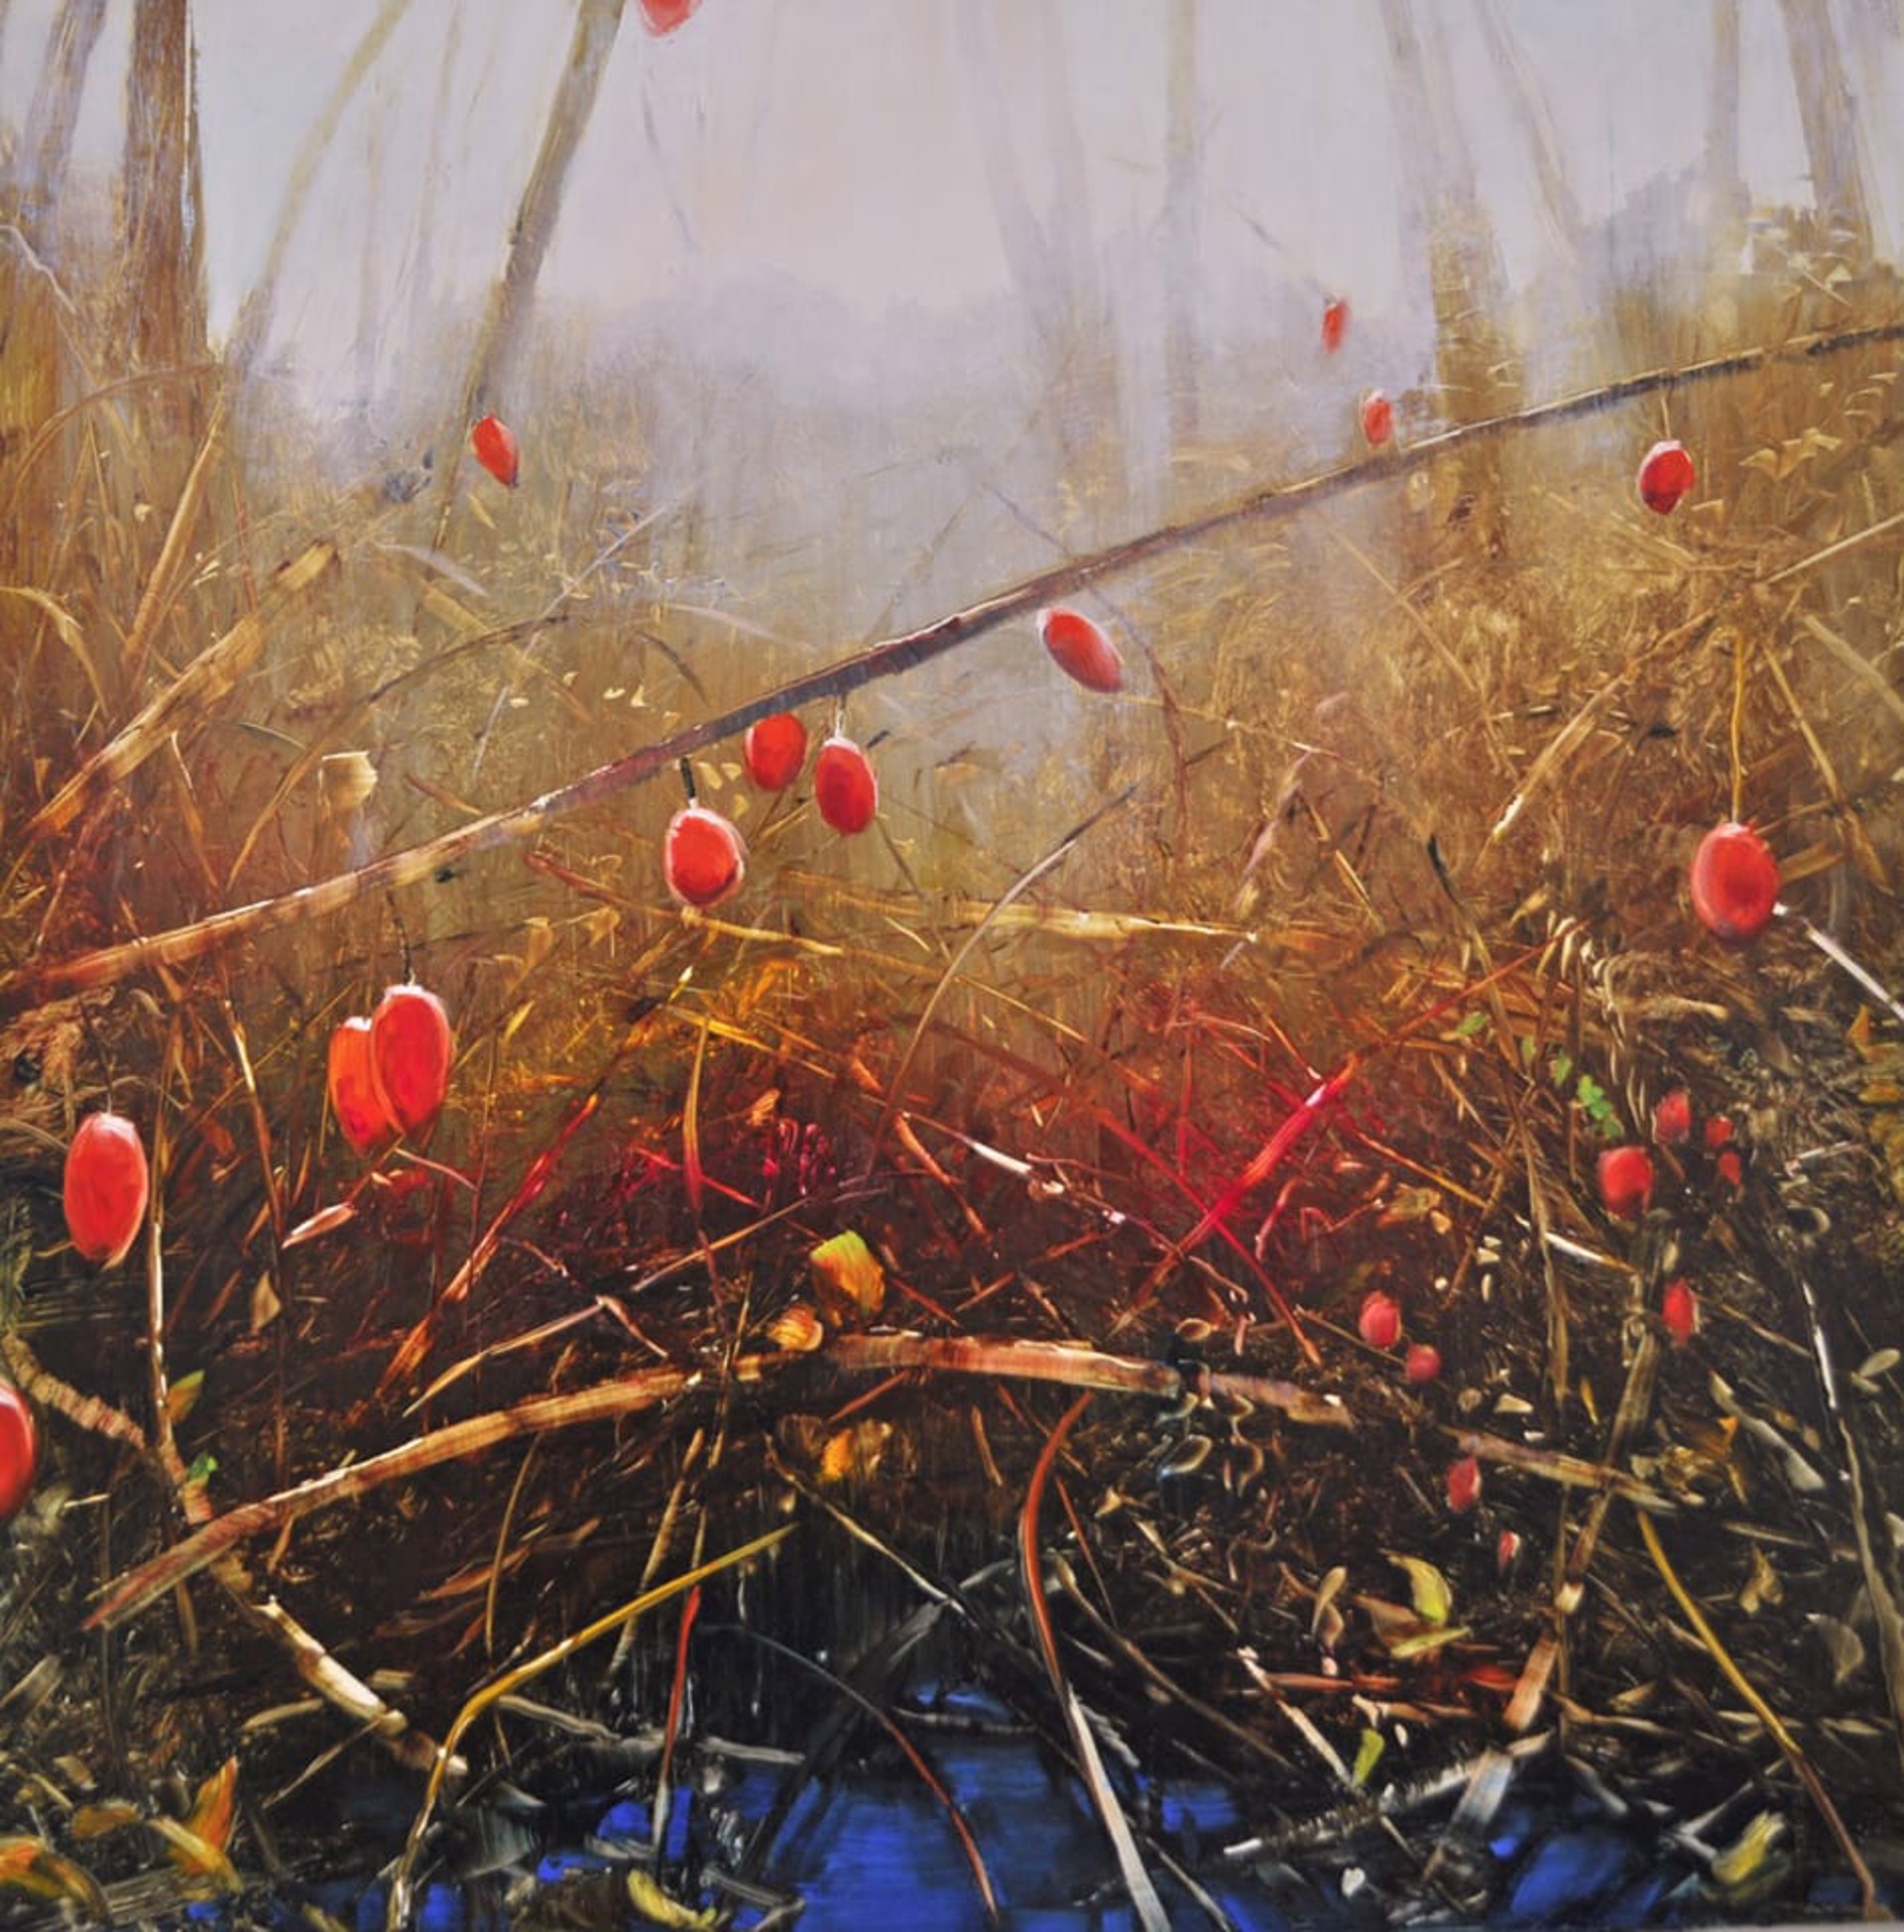 December Atmosphere, Winterberry by David Dunlop